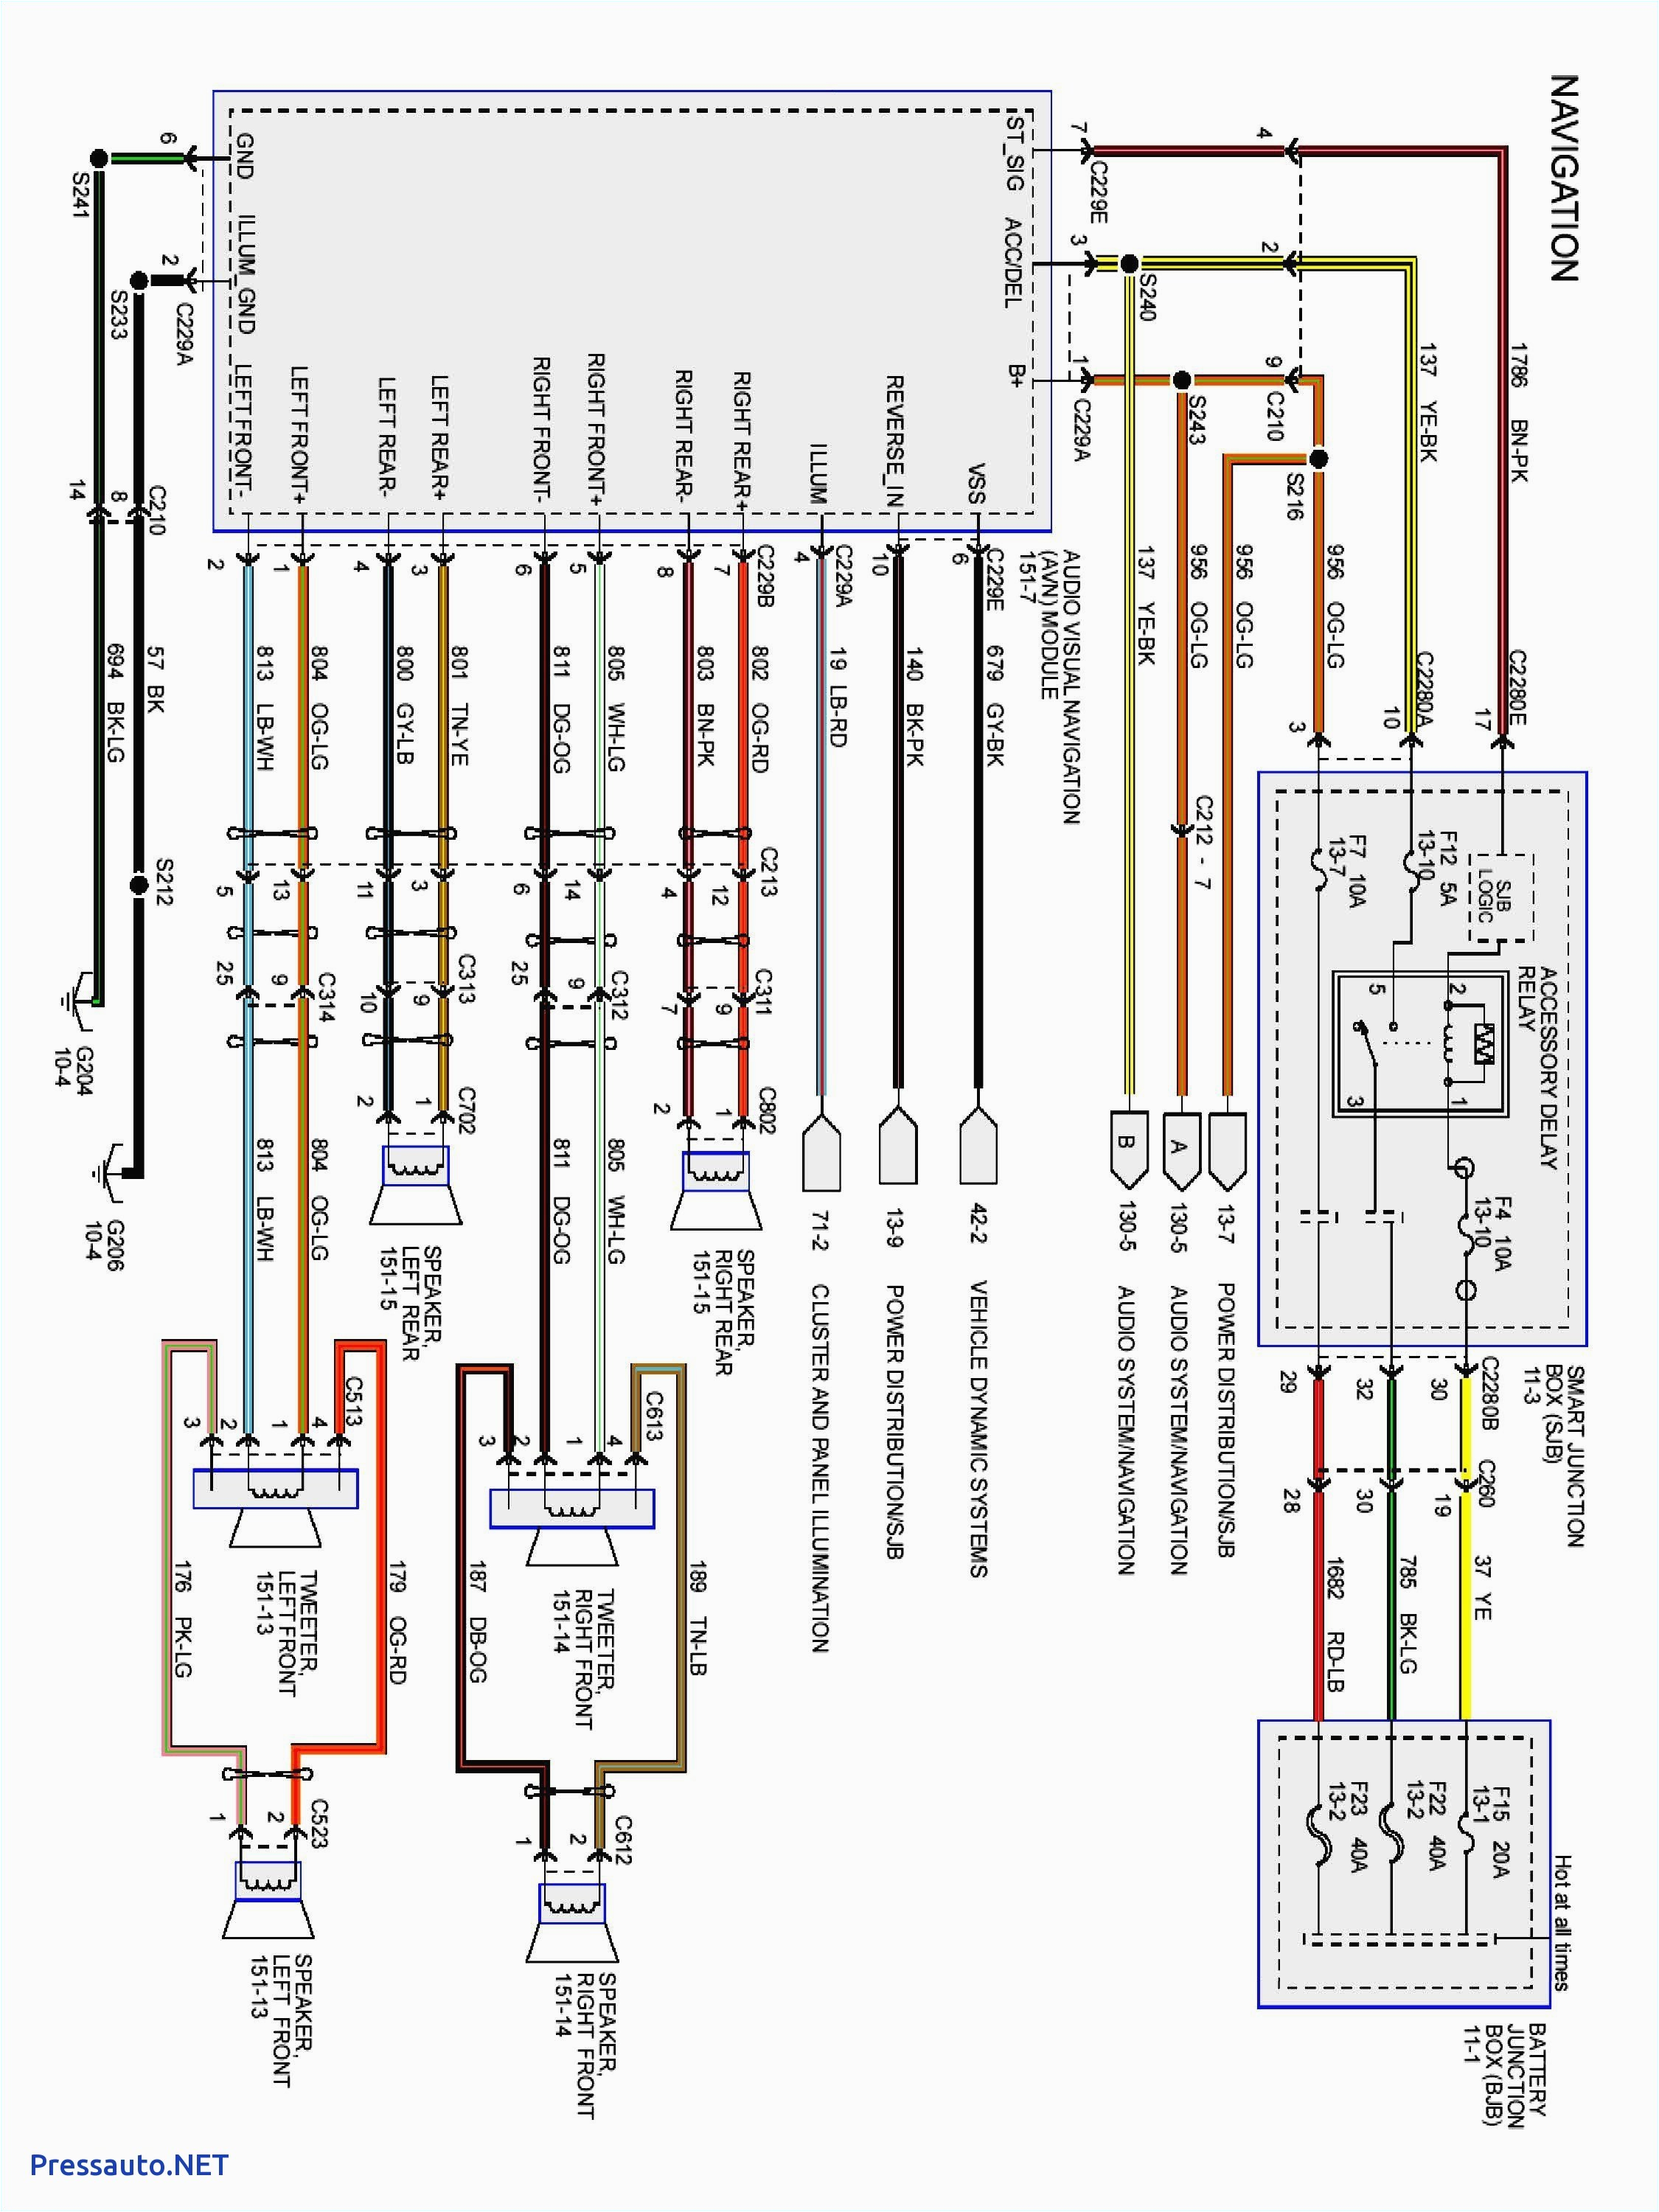 2006 Mercury Mariner Radio Wiring Diagram Electrical Wiring Diagrams ford 2005 Wiring Diagram Blog